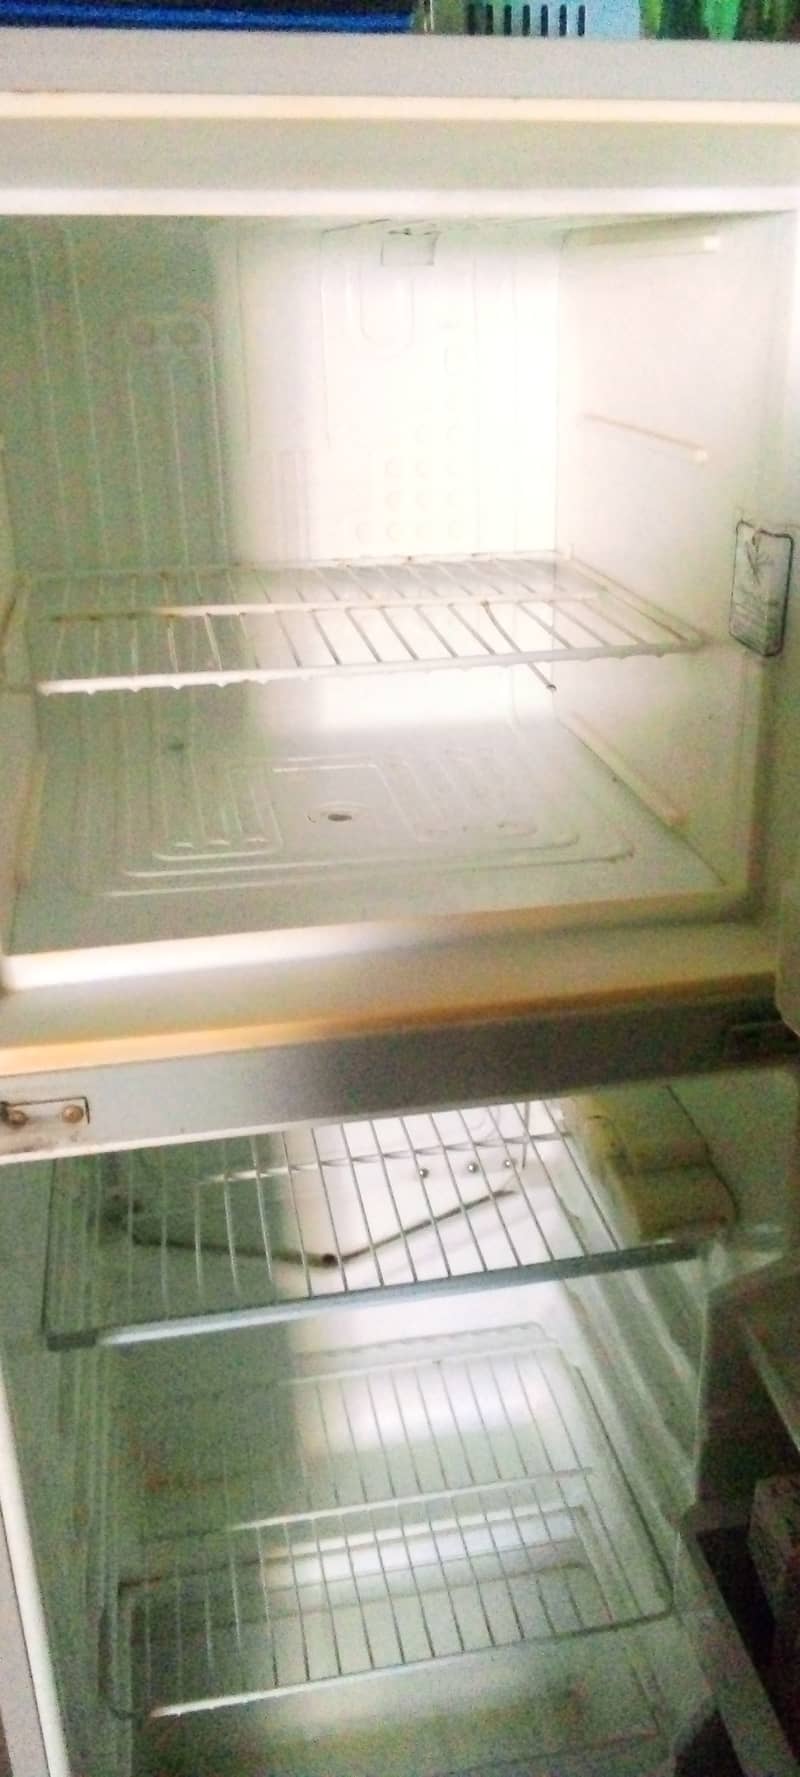 Dawlance refrigerator 1